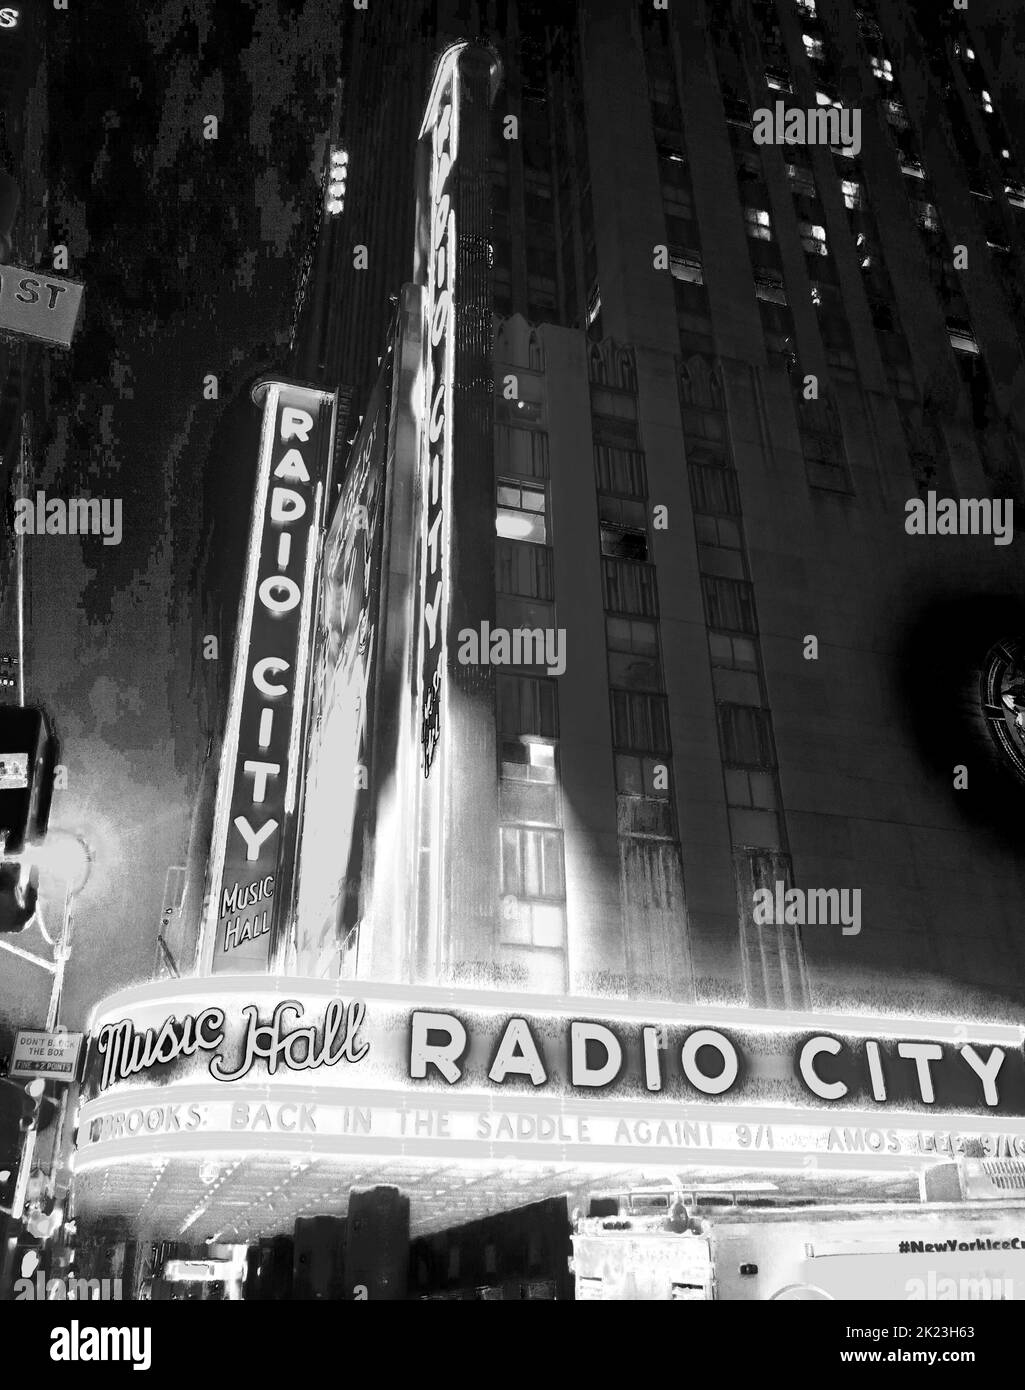 Radio City Building, New York, États-Unis Banque D'Images